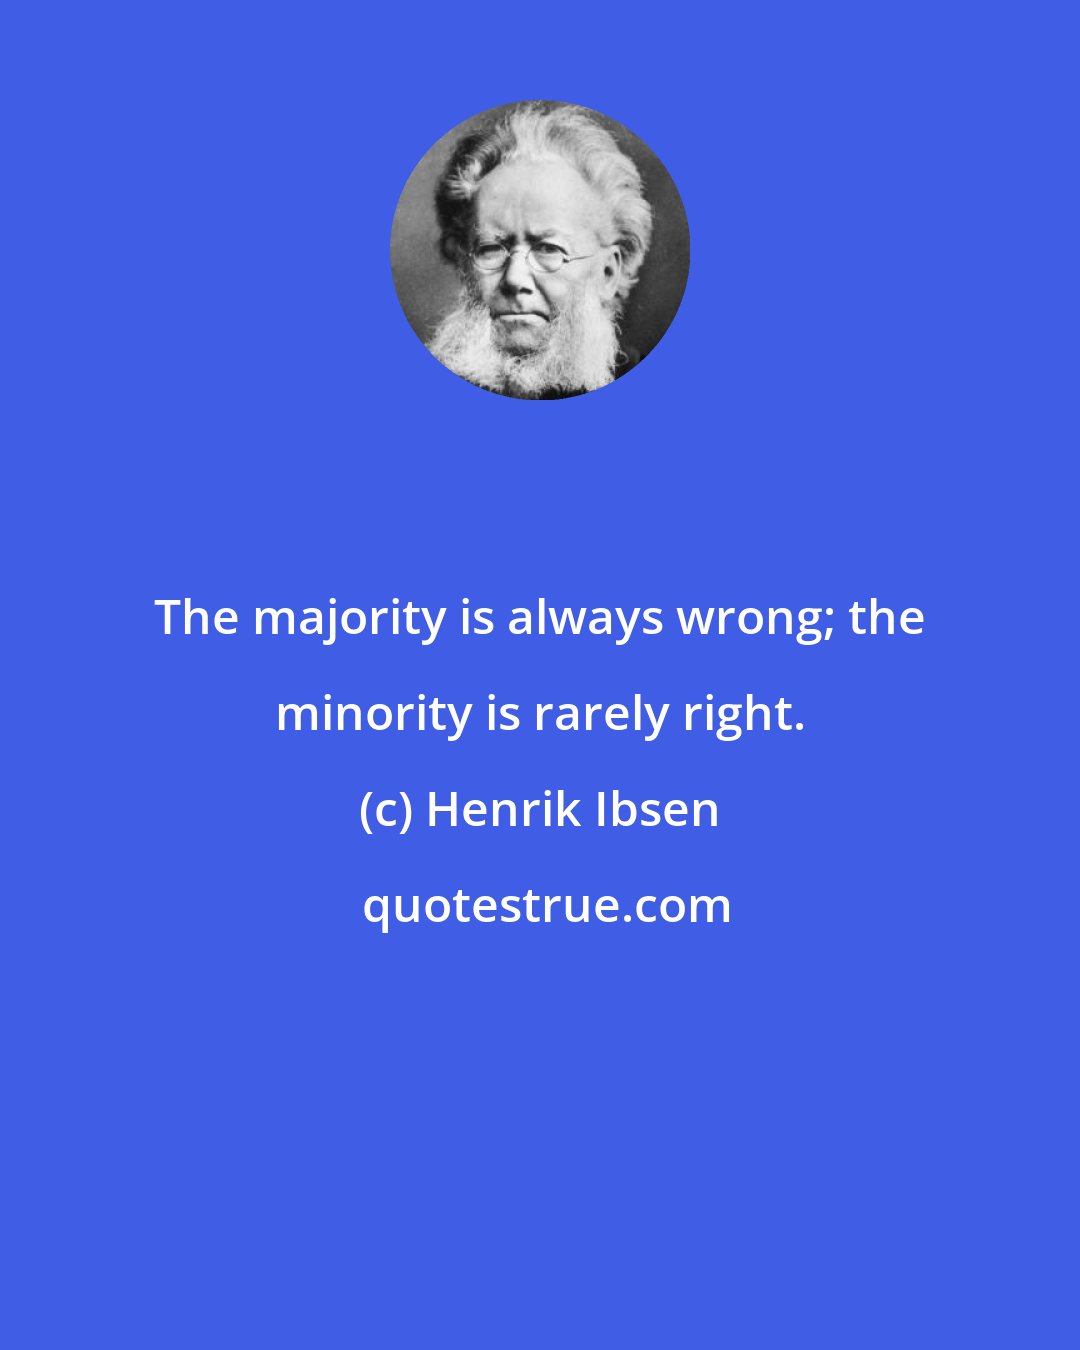 Henrik Ibsen: The majority is always wrong; the minority is rarely right.